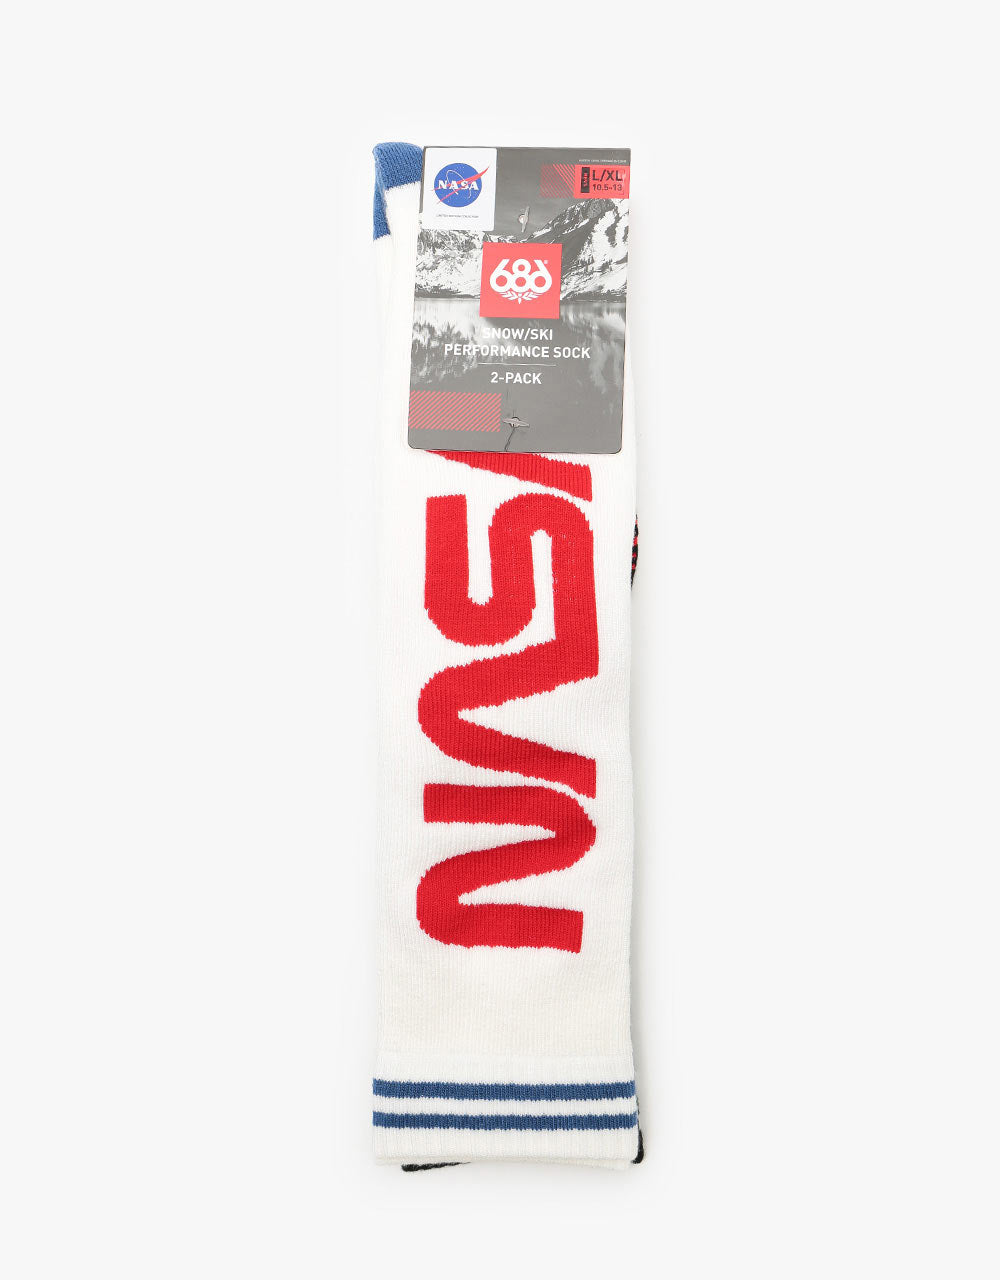 686 x NASA 2-Pack Snowboard Socks - Assorted